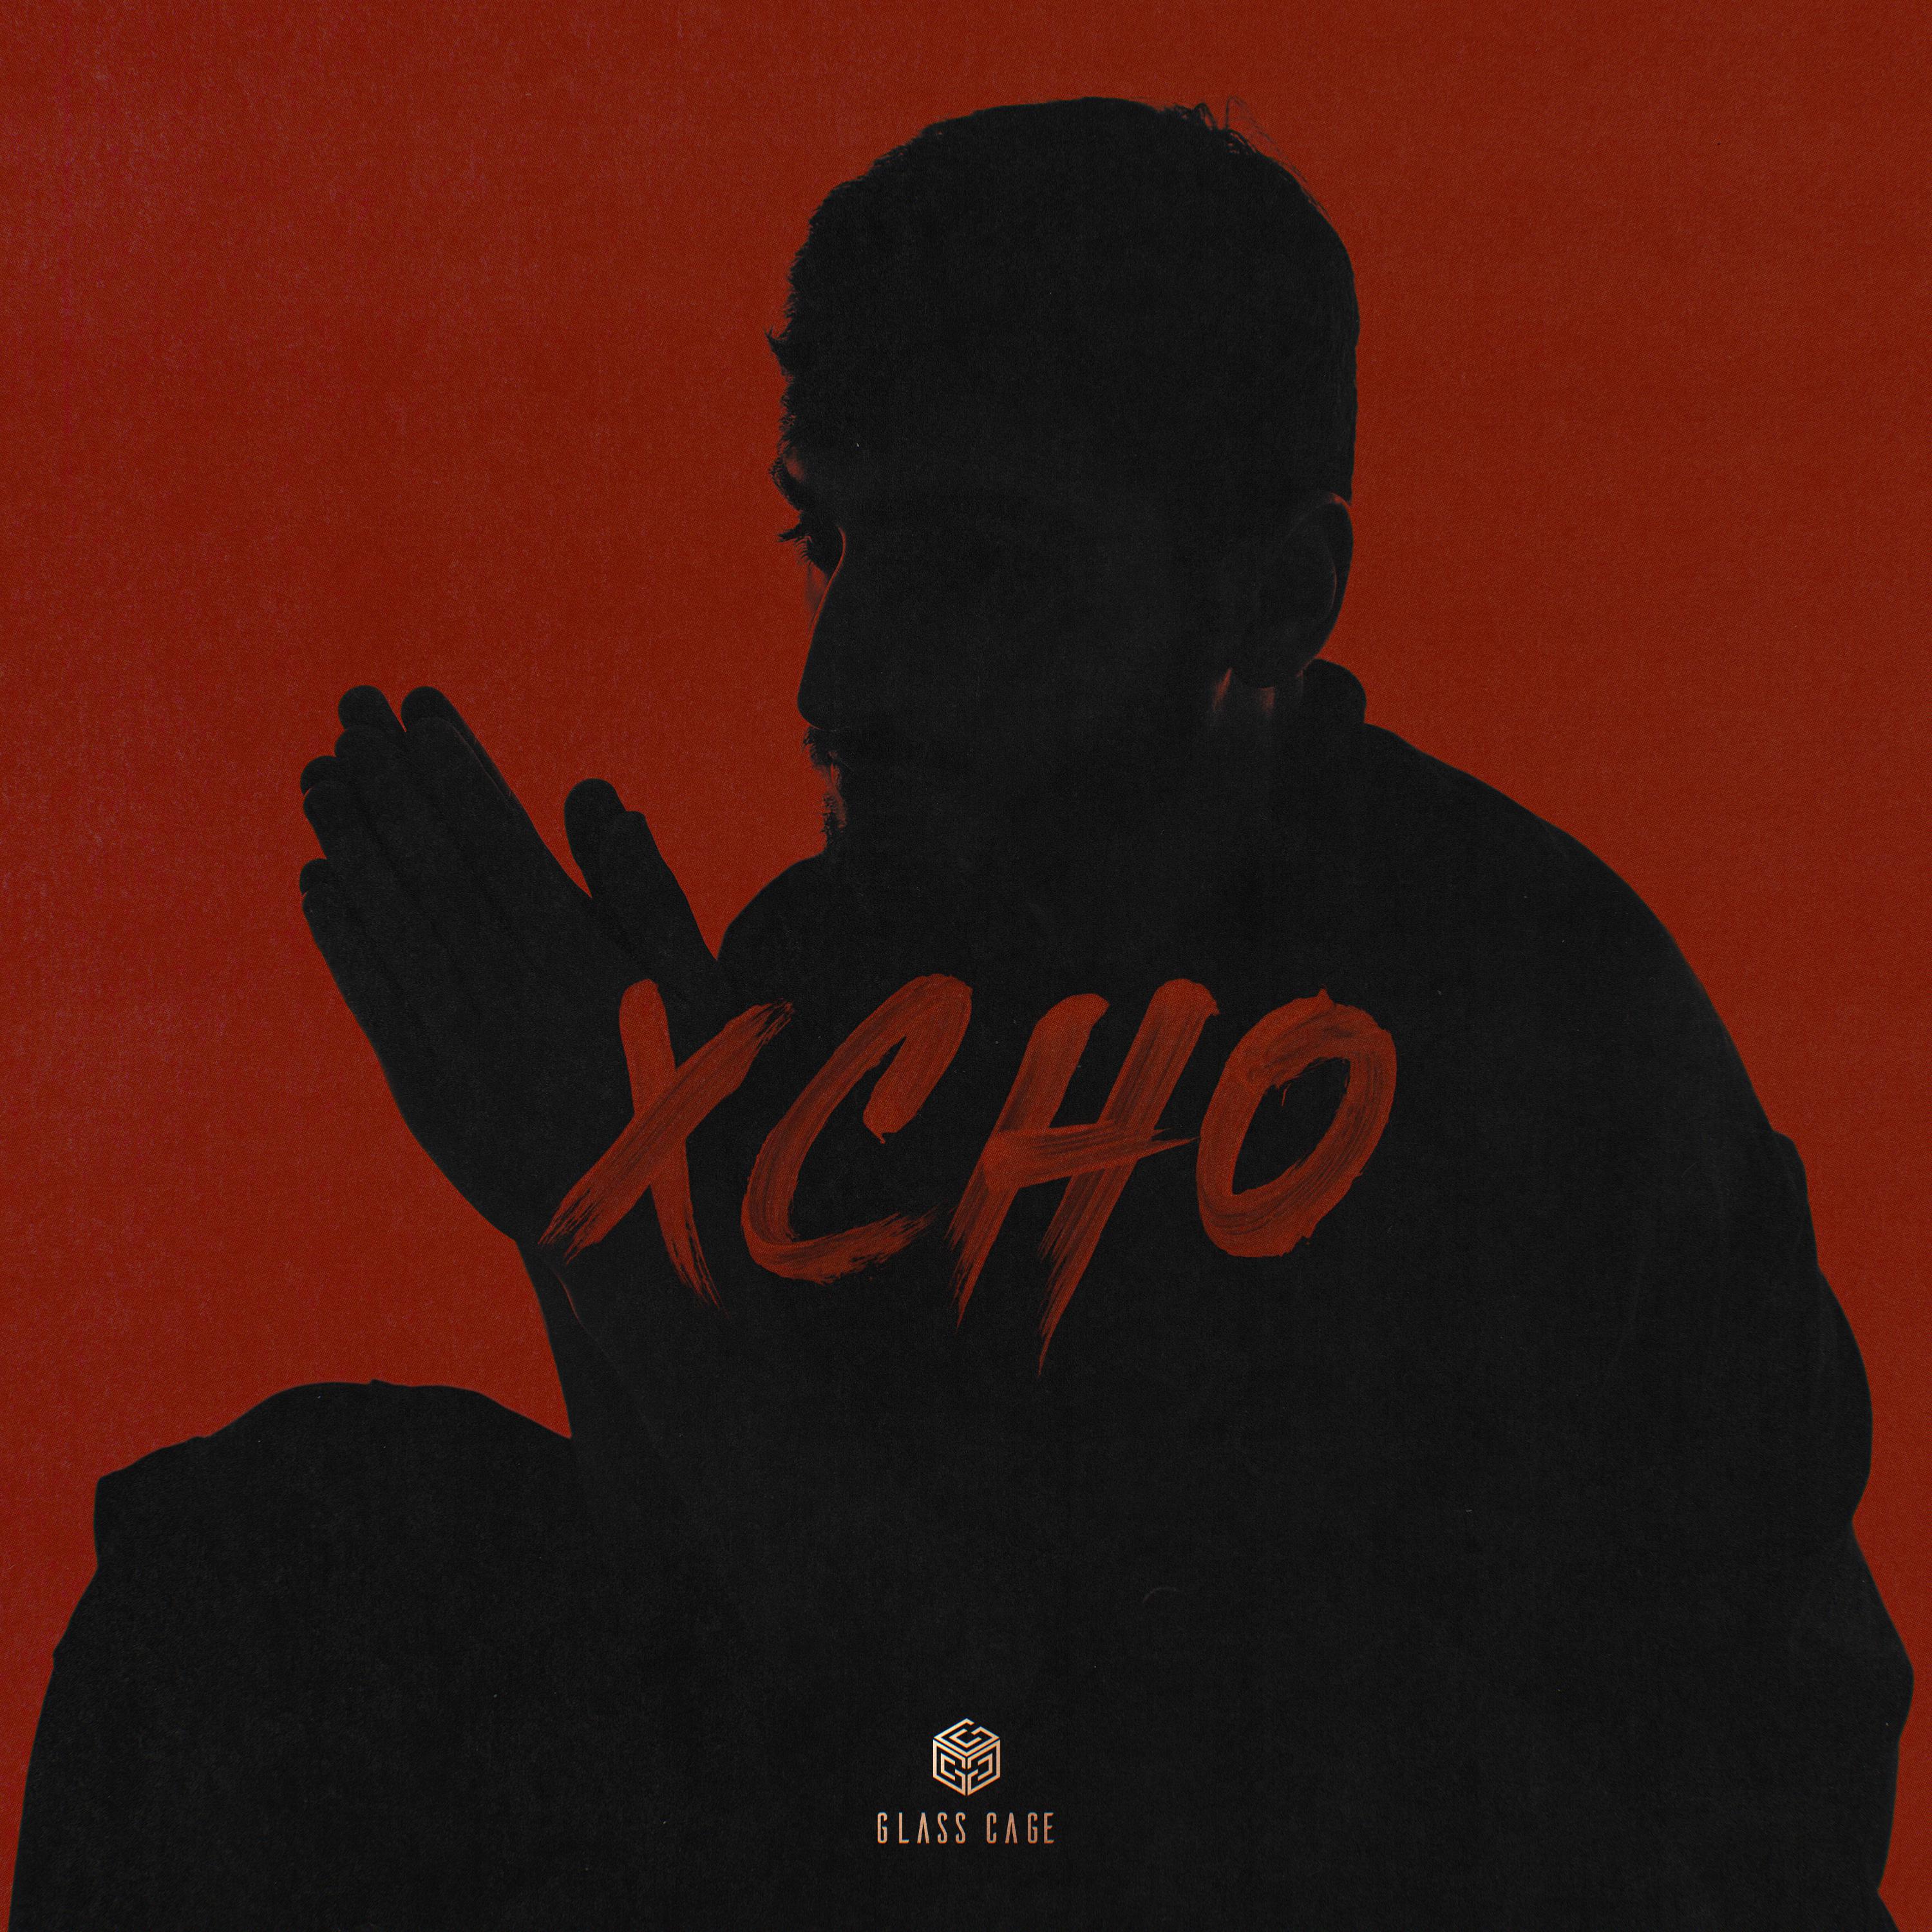 Xcho - Мир на двоих текст слова